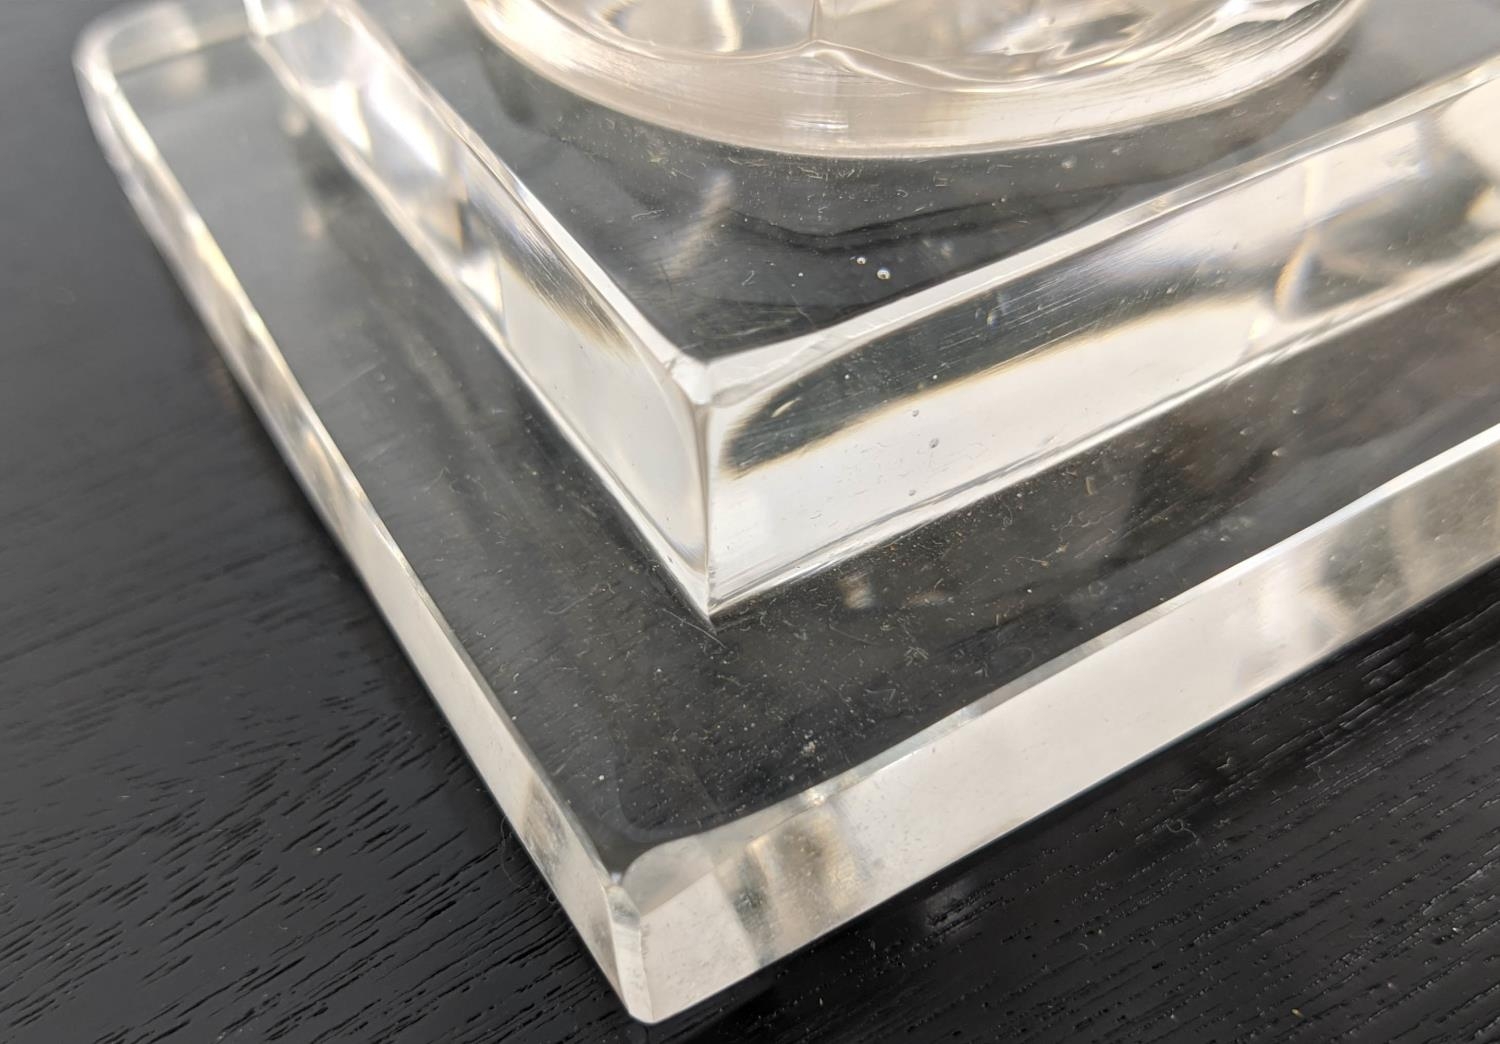 HURRICANE LANTERNS, a pair, cut glass, 39.5cm x 14.5cm diam. (2) - Image 4 of 4